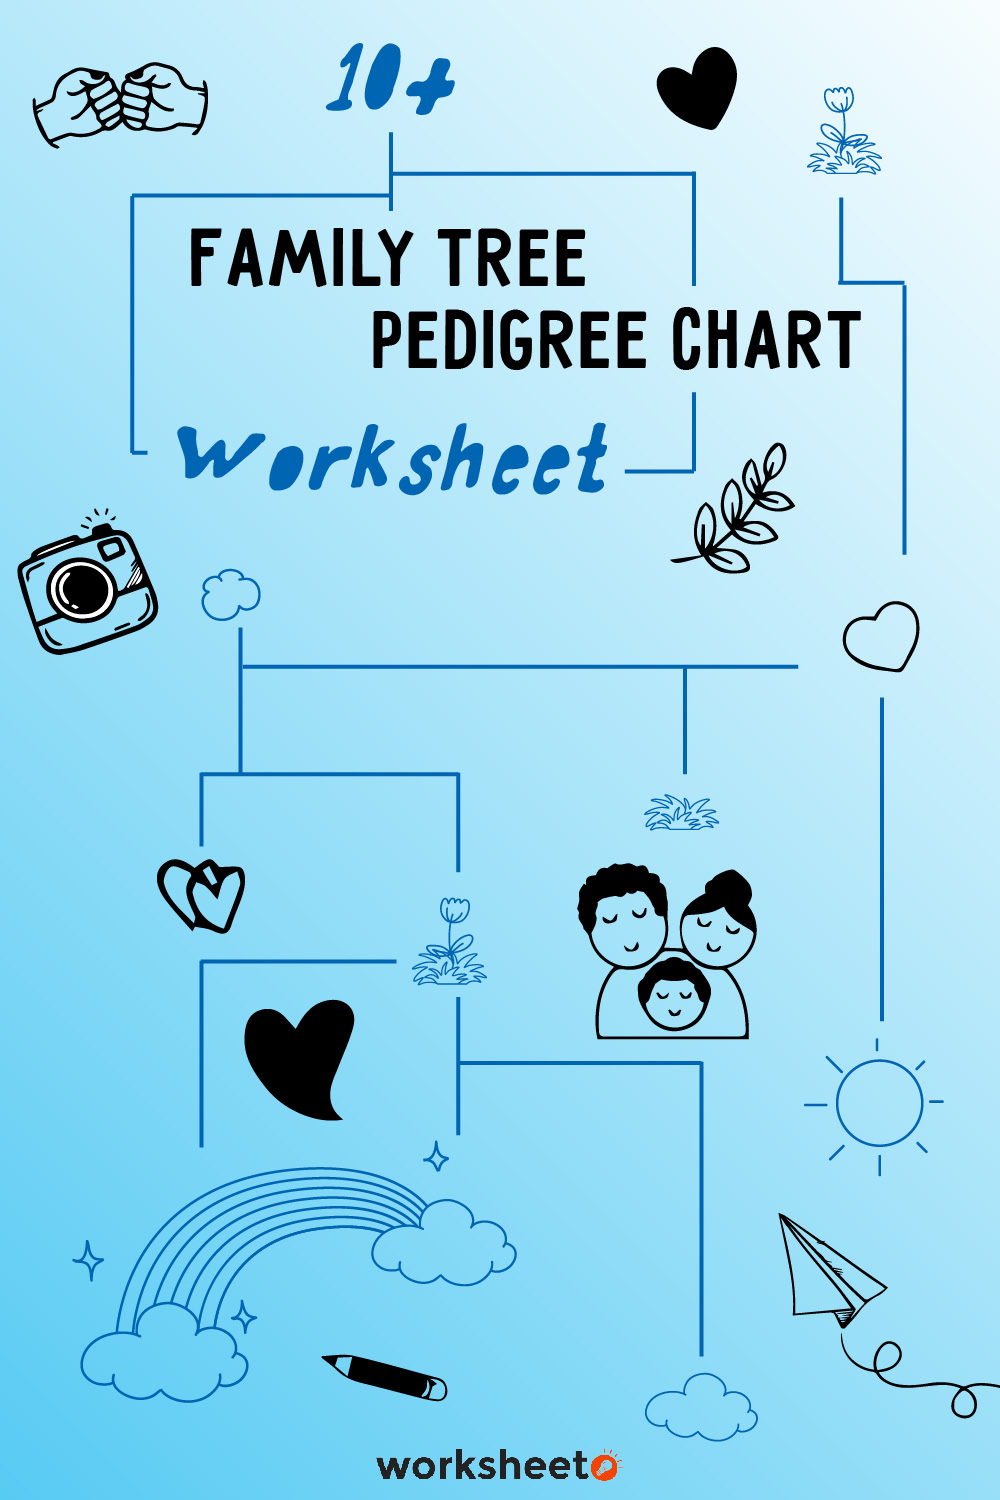 Family Tree Pedigree Chart Worksheet